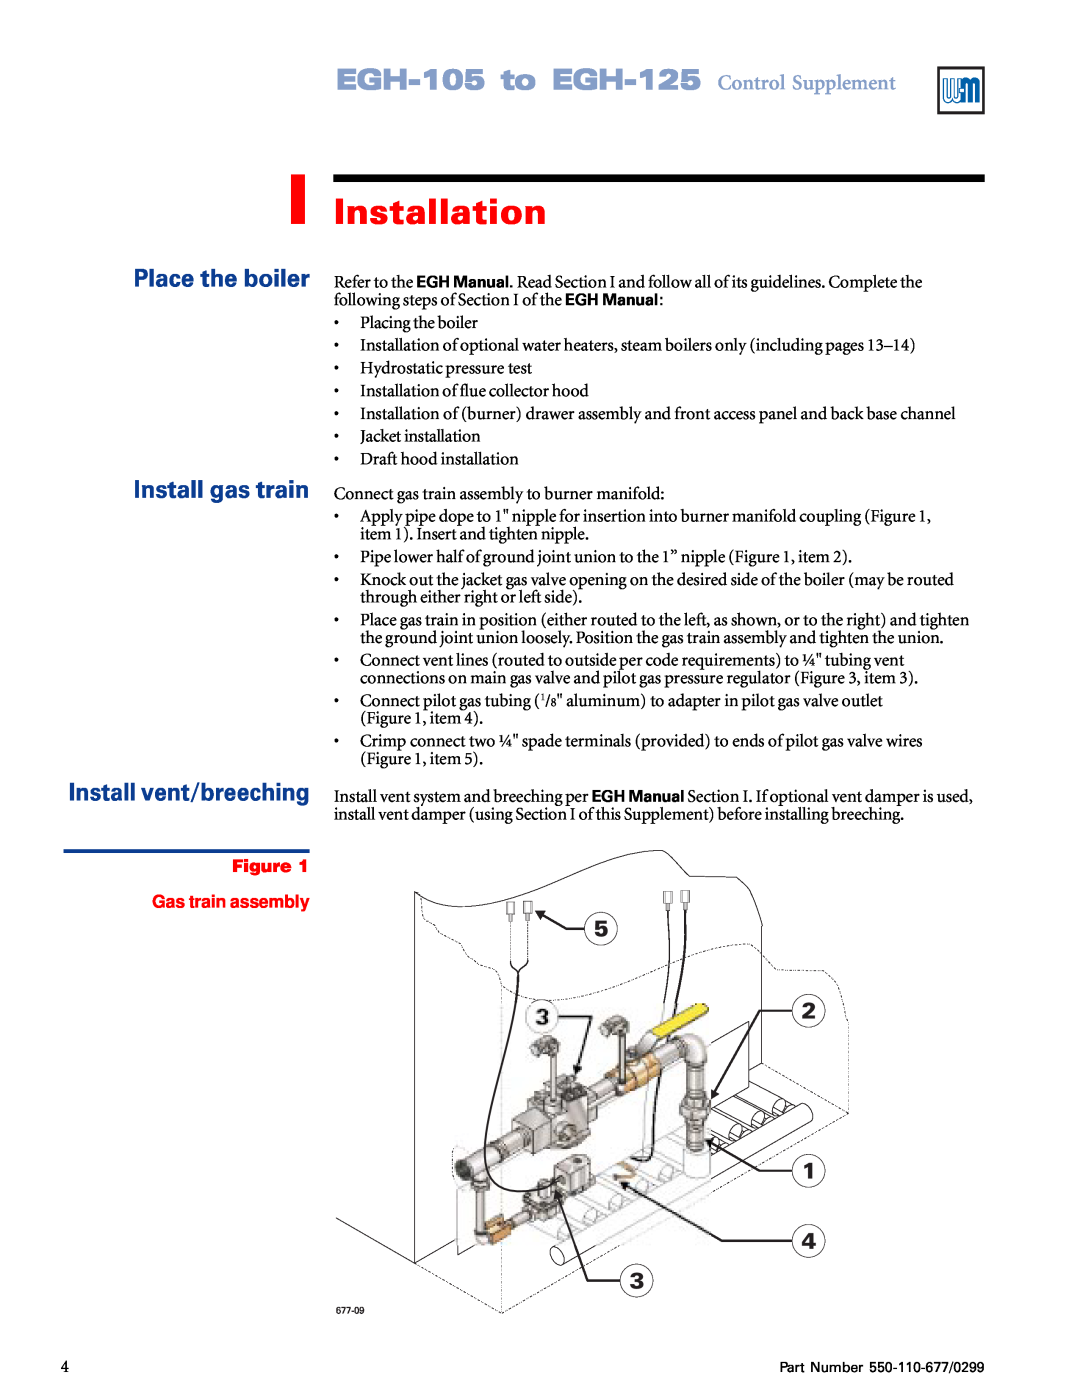 Weil-McLain EGH-105, EGH-125 manual Installation, Place the boiler Install gas train, Install vent/breeching, 5 32 